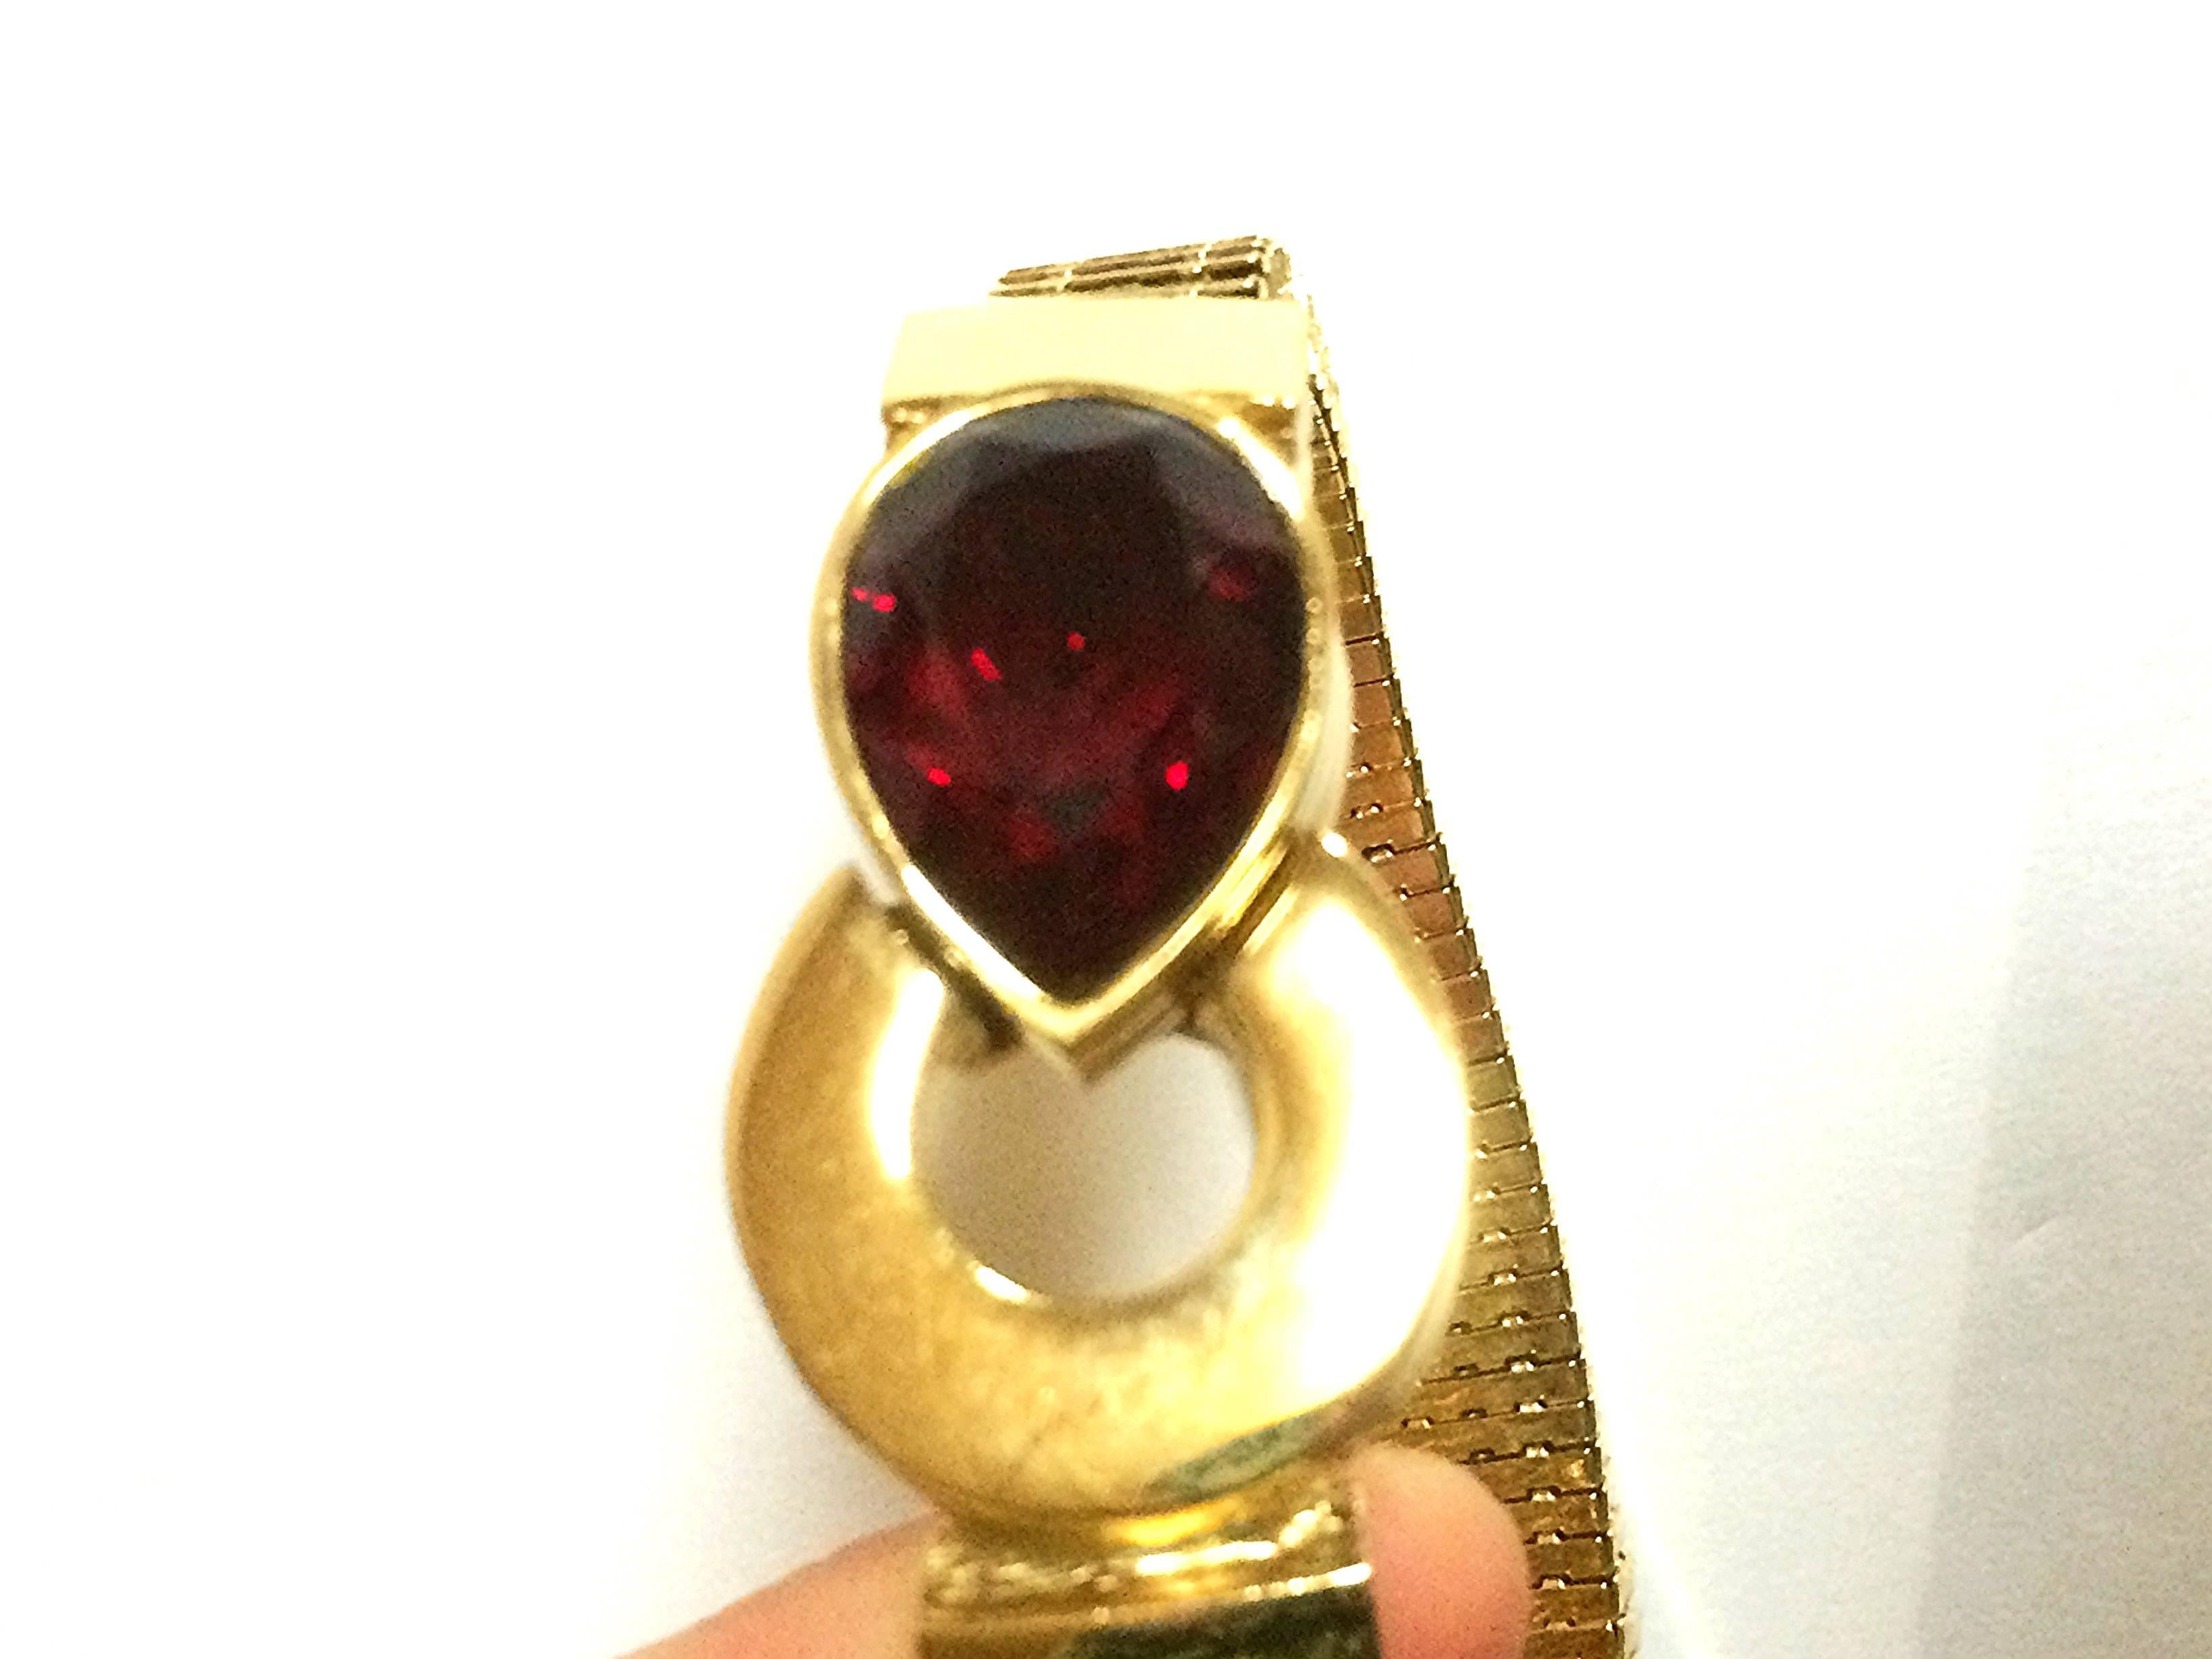 MINT. Vintage Givenchy golden flat chain bracelet with red Swarovski teardrop. 4